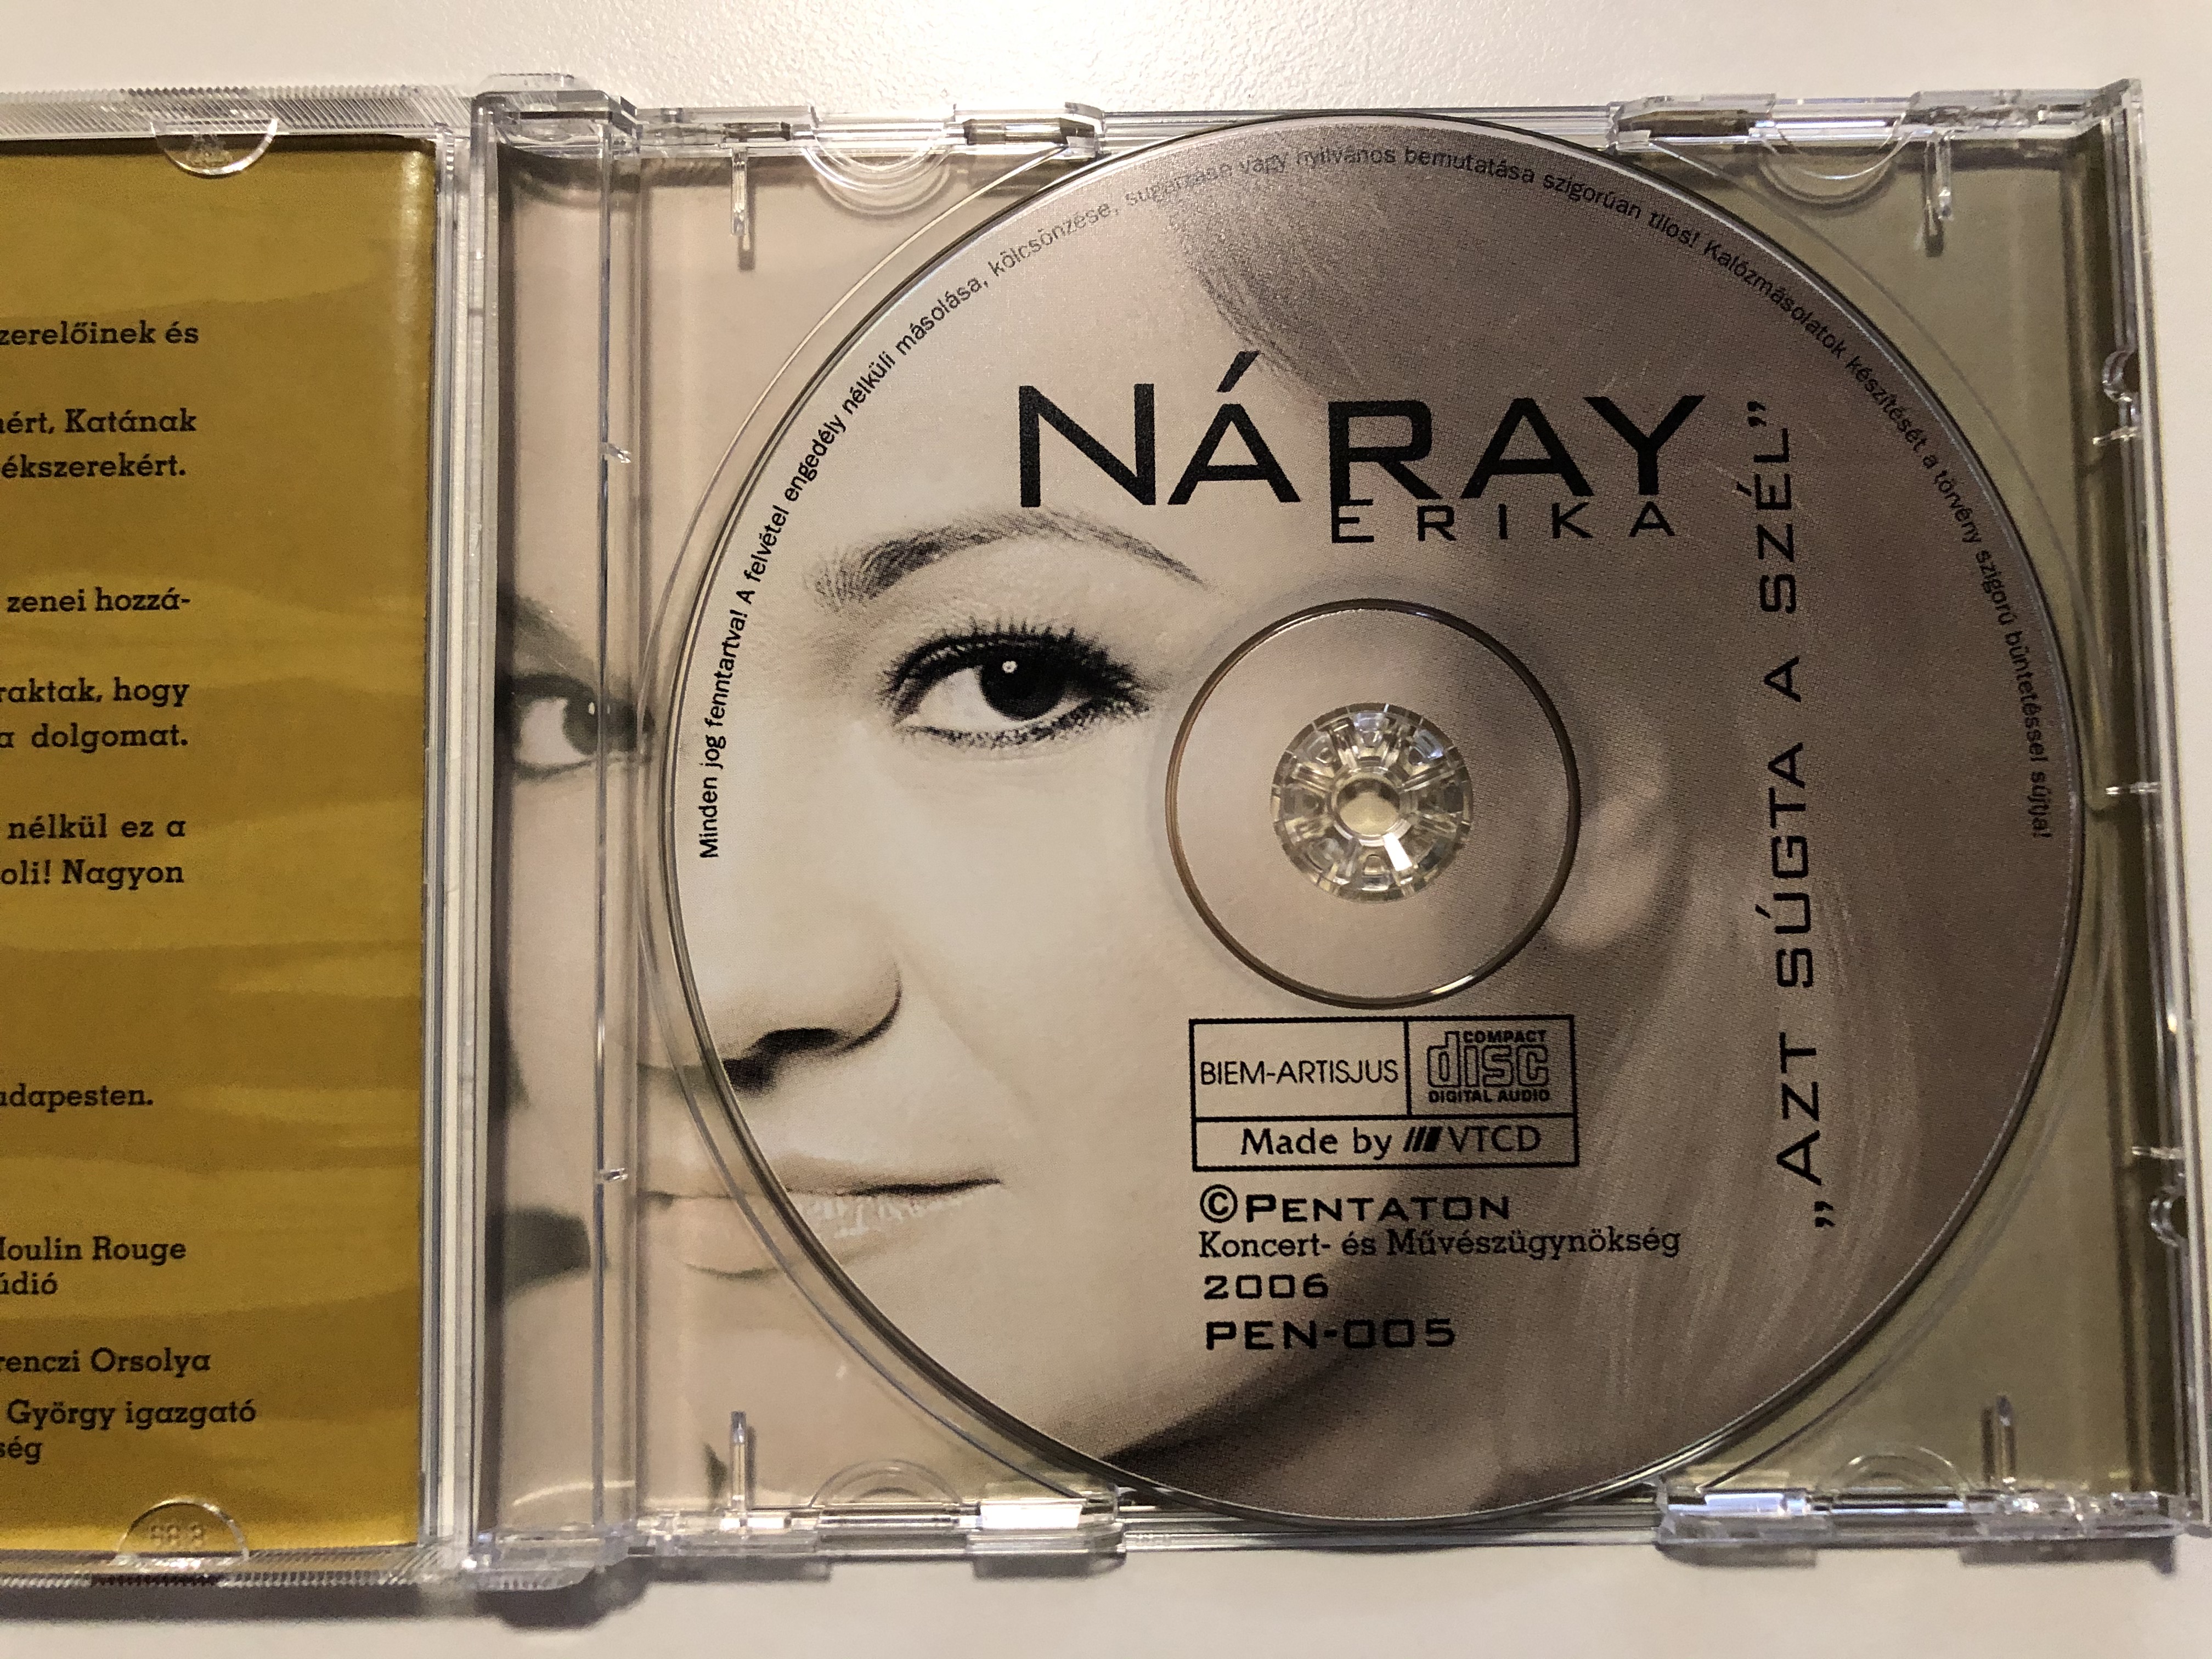 n-ray-erika-azt-s-gta-a-sz-l-pentaton-audio-cd-2006-pen-005-6-.jpg